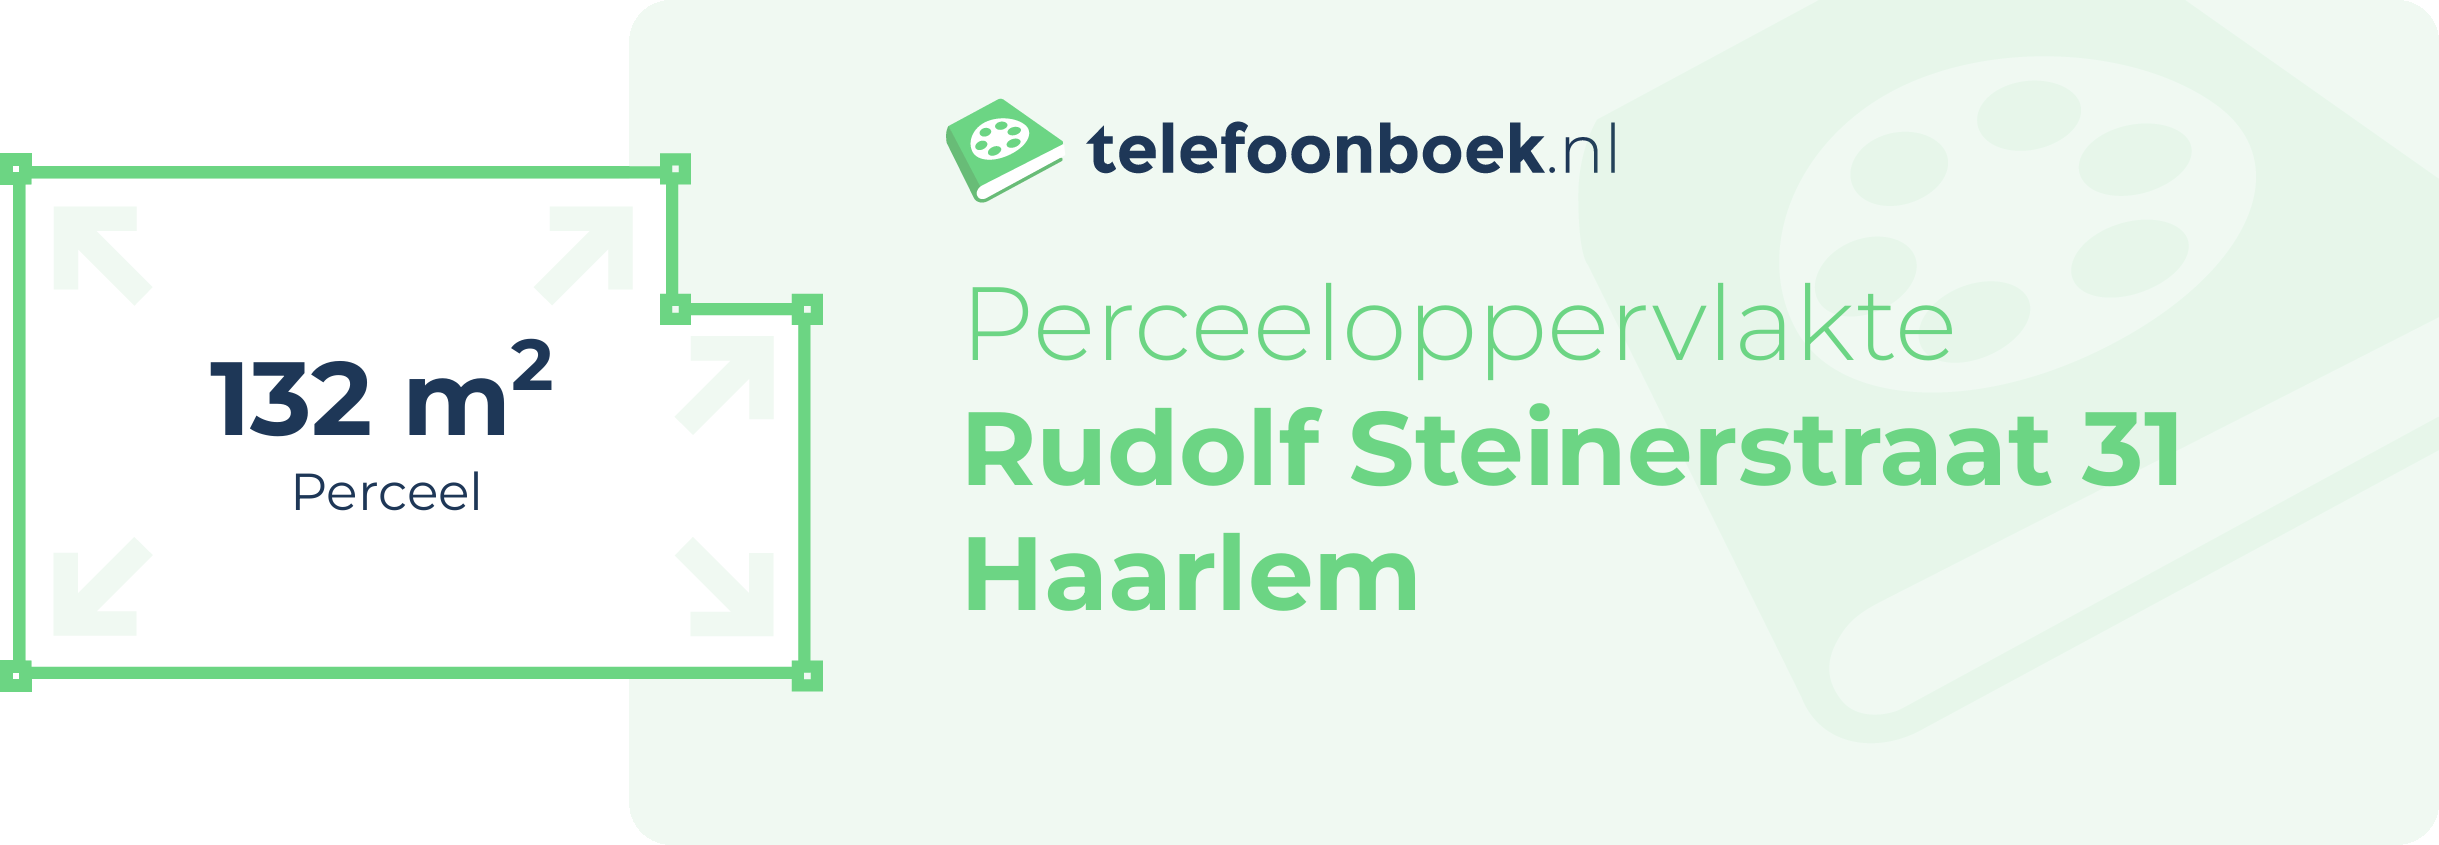 Perceeloppervlakte Rudolf Steinerstraat 31 Haarlem